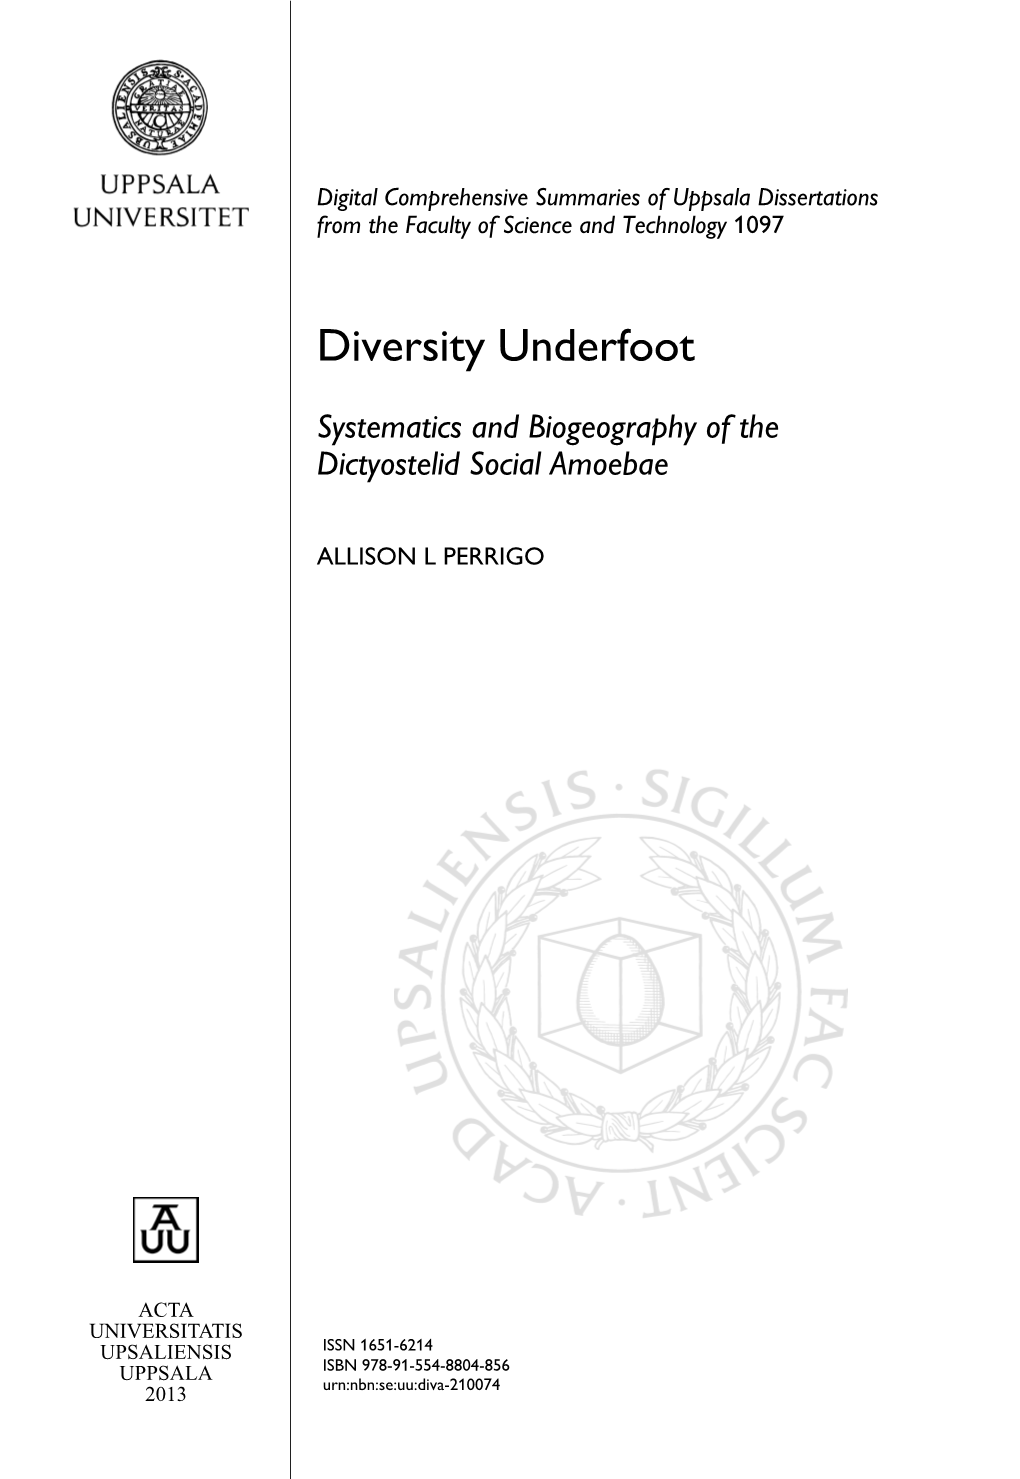 Diversity Underfoot